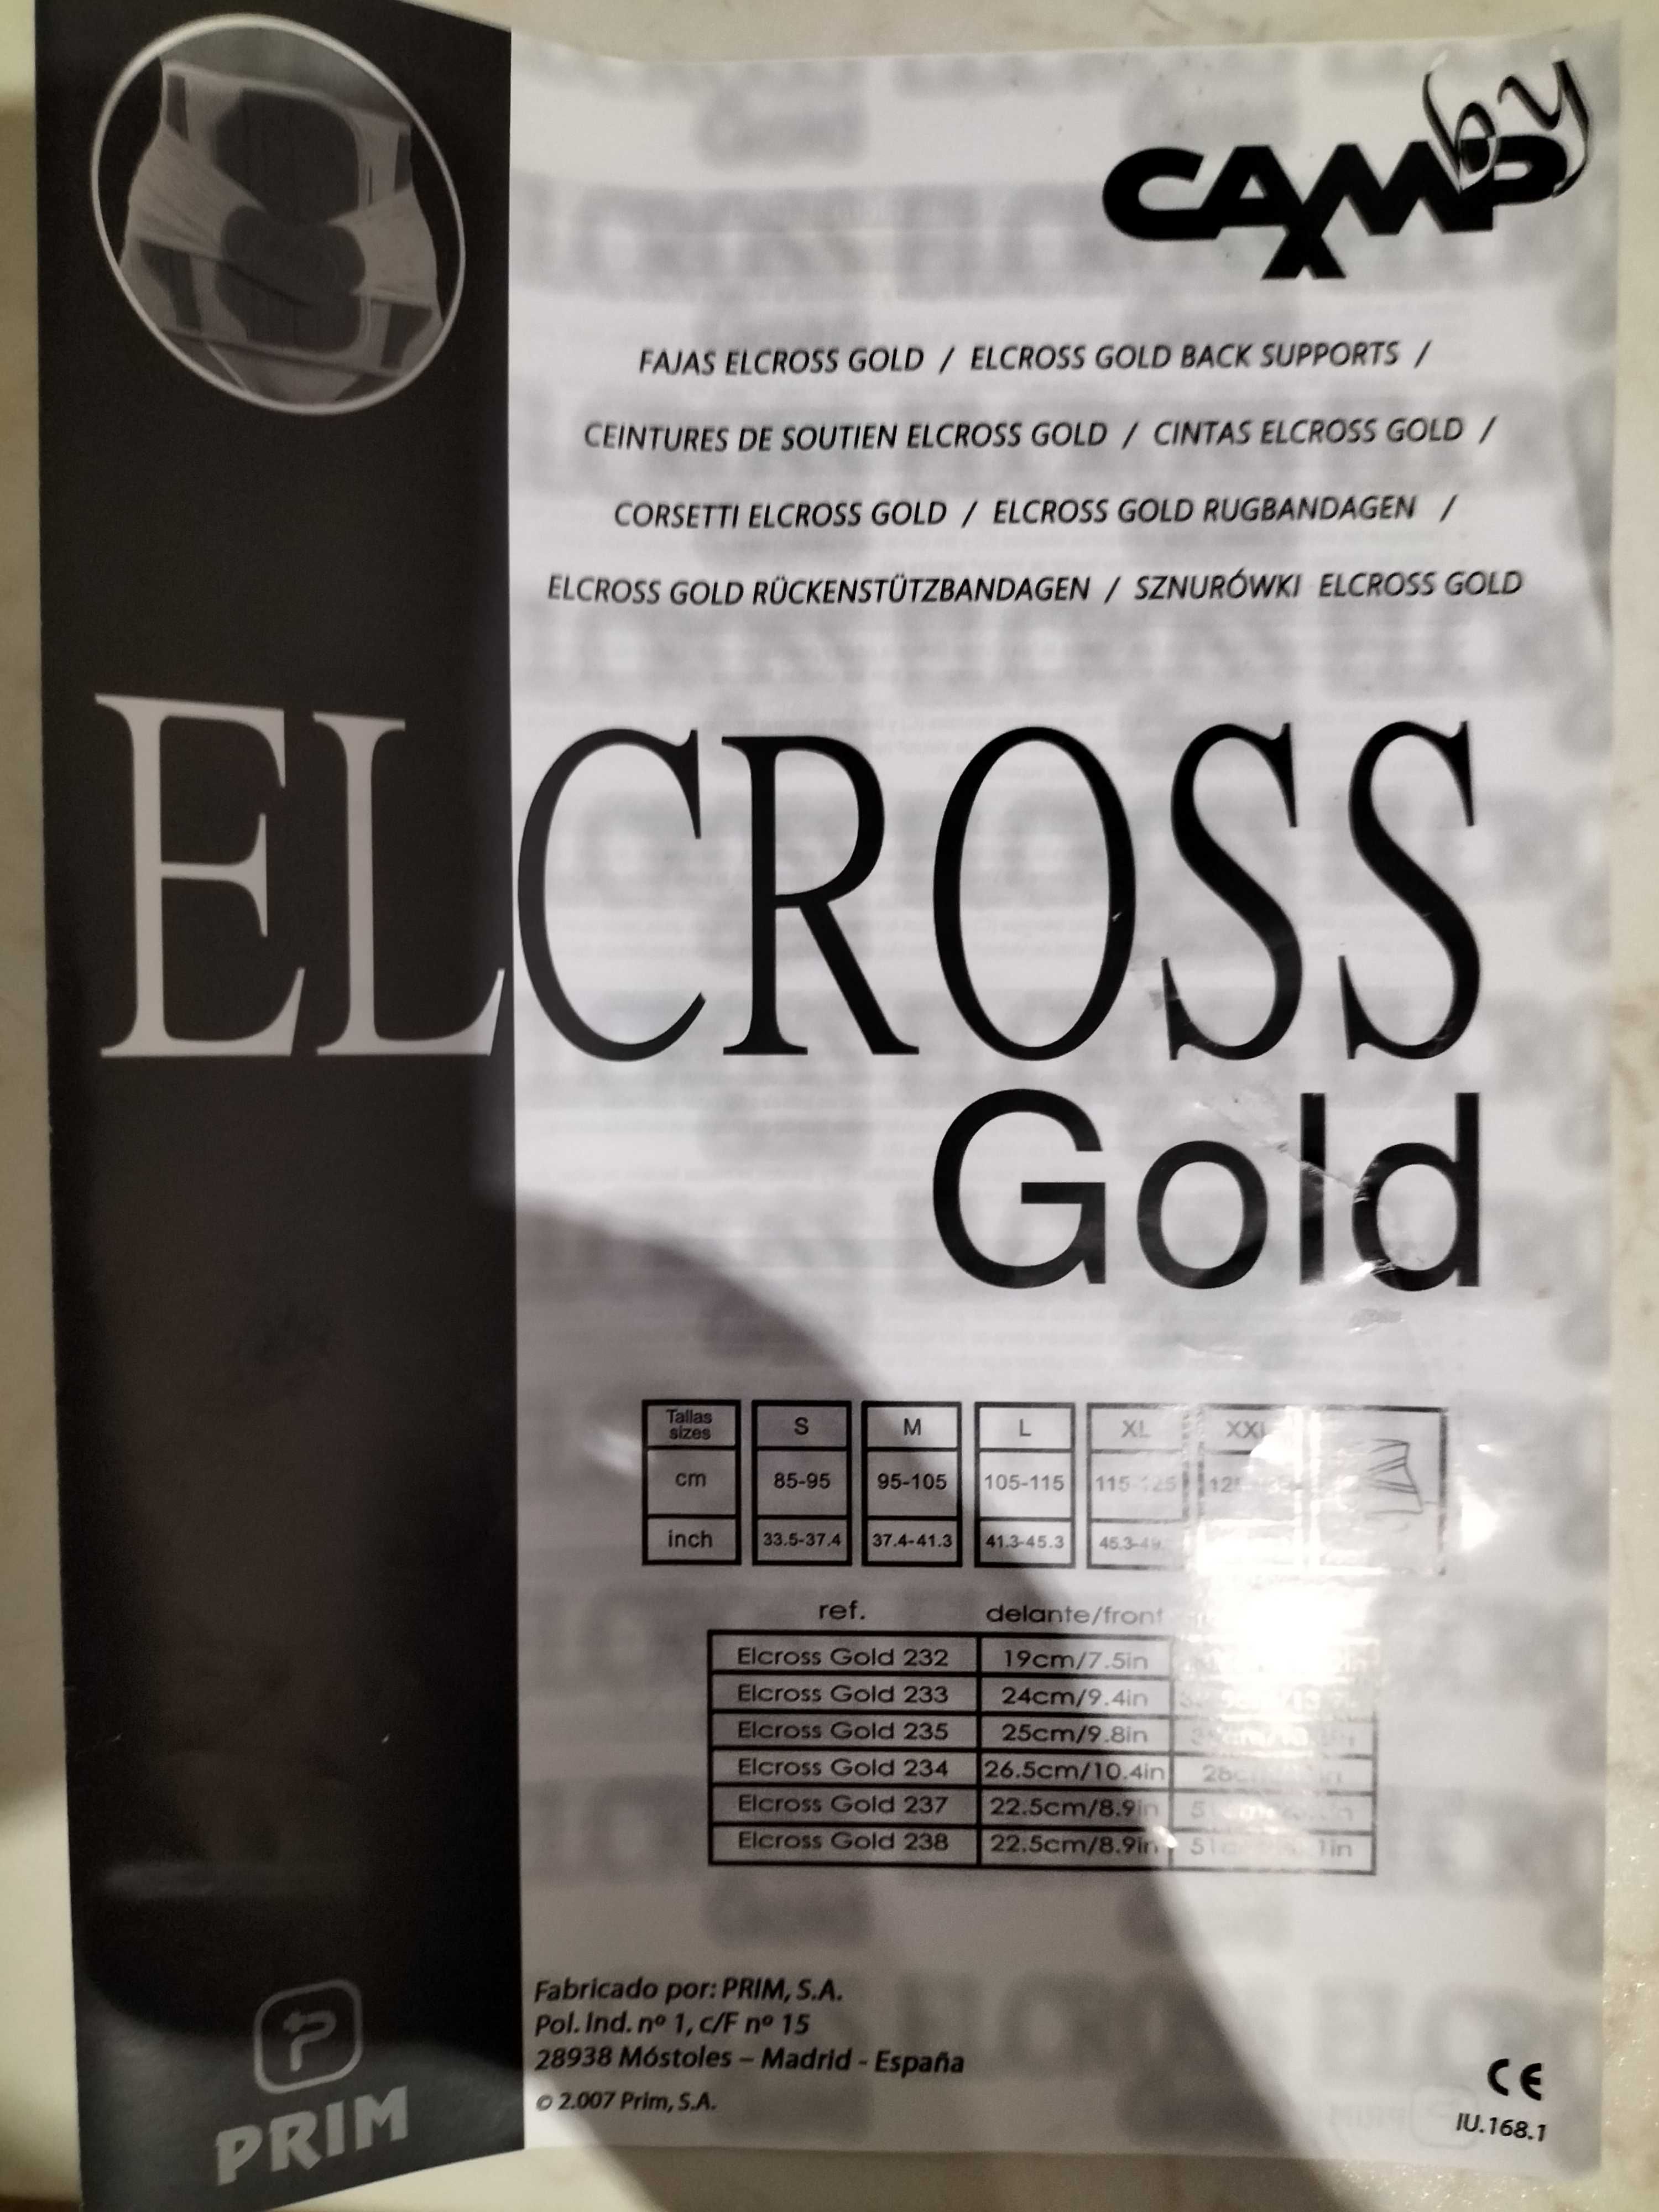 Gorset zapinany Elcross Gold